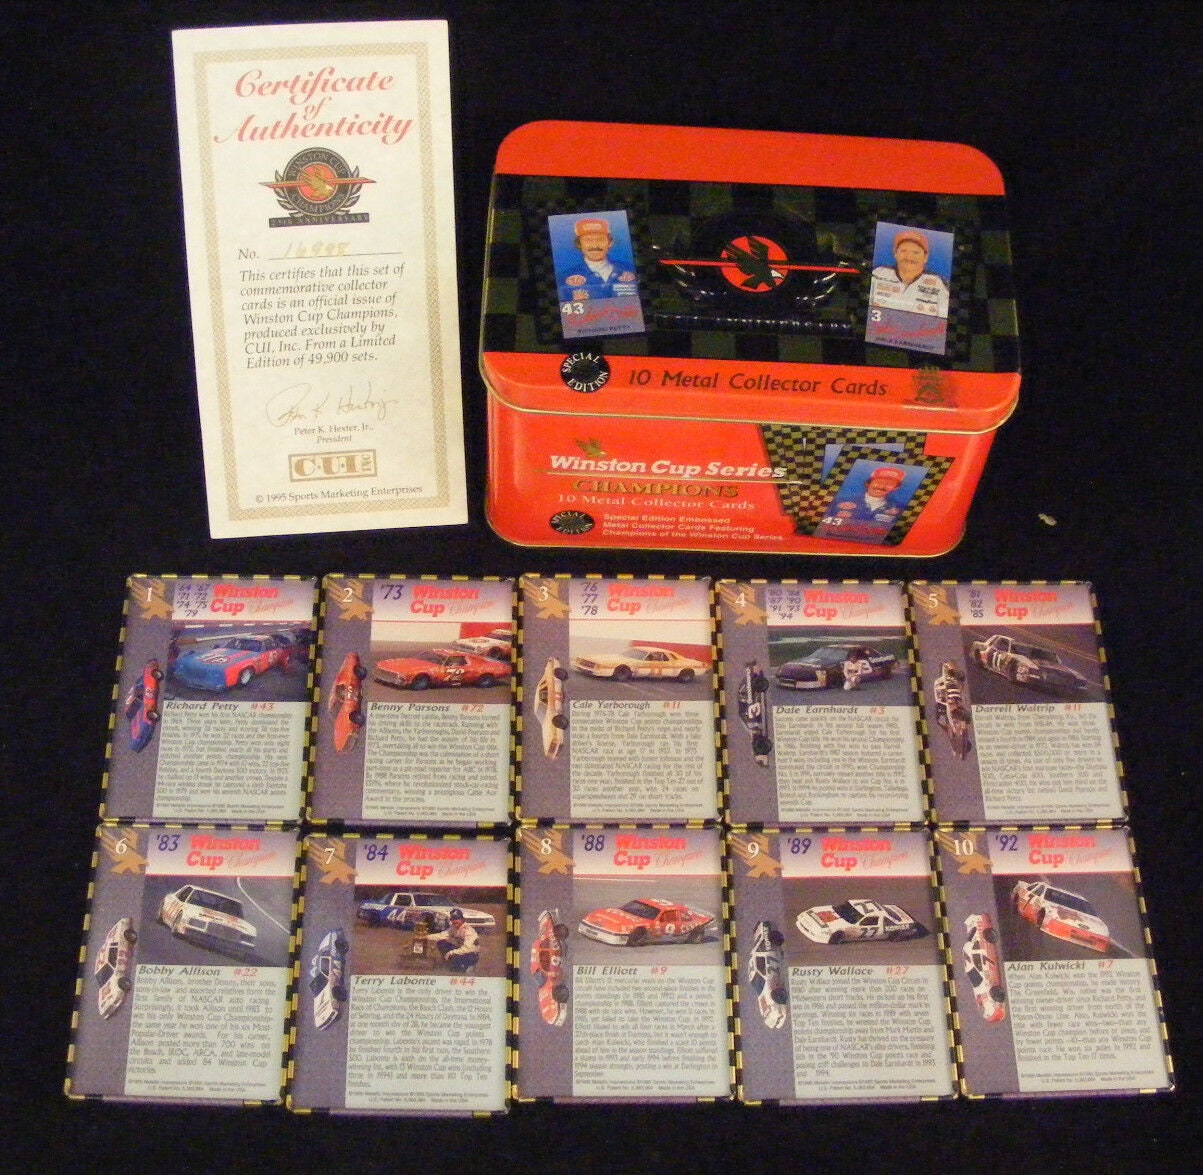 1995 Metallic Impressions Kyle Petty Metal Card Set